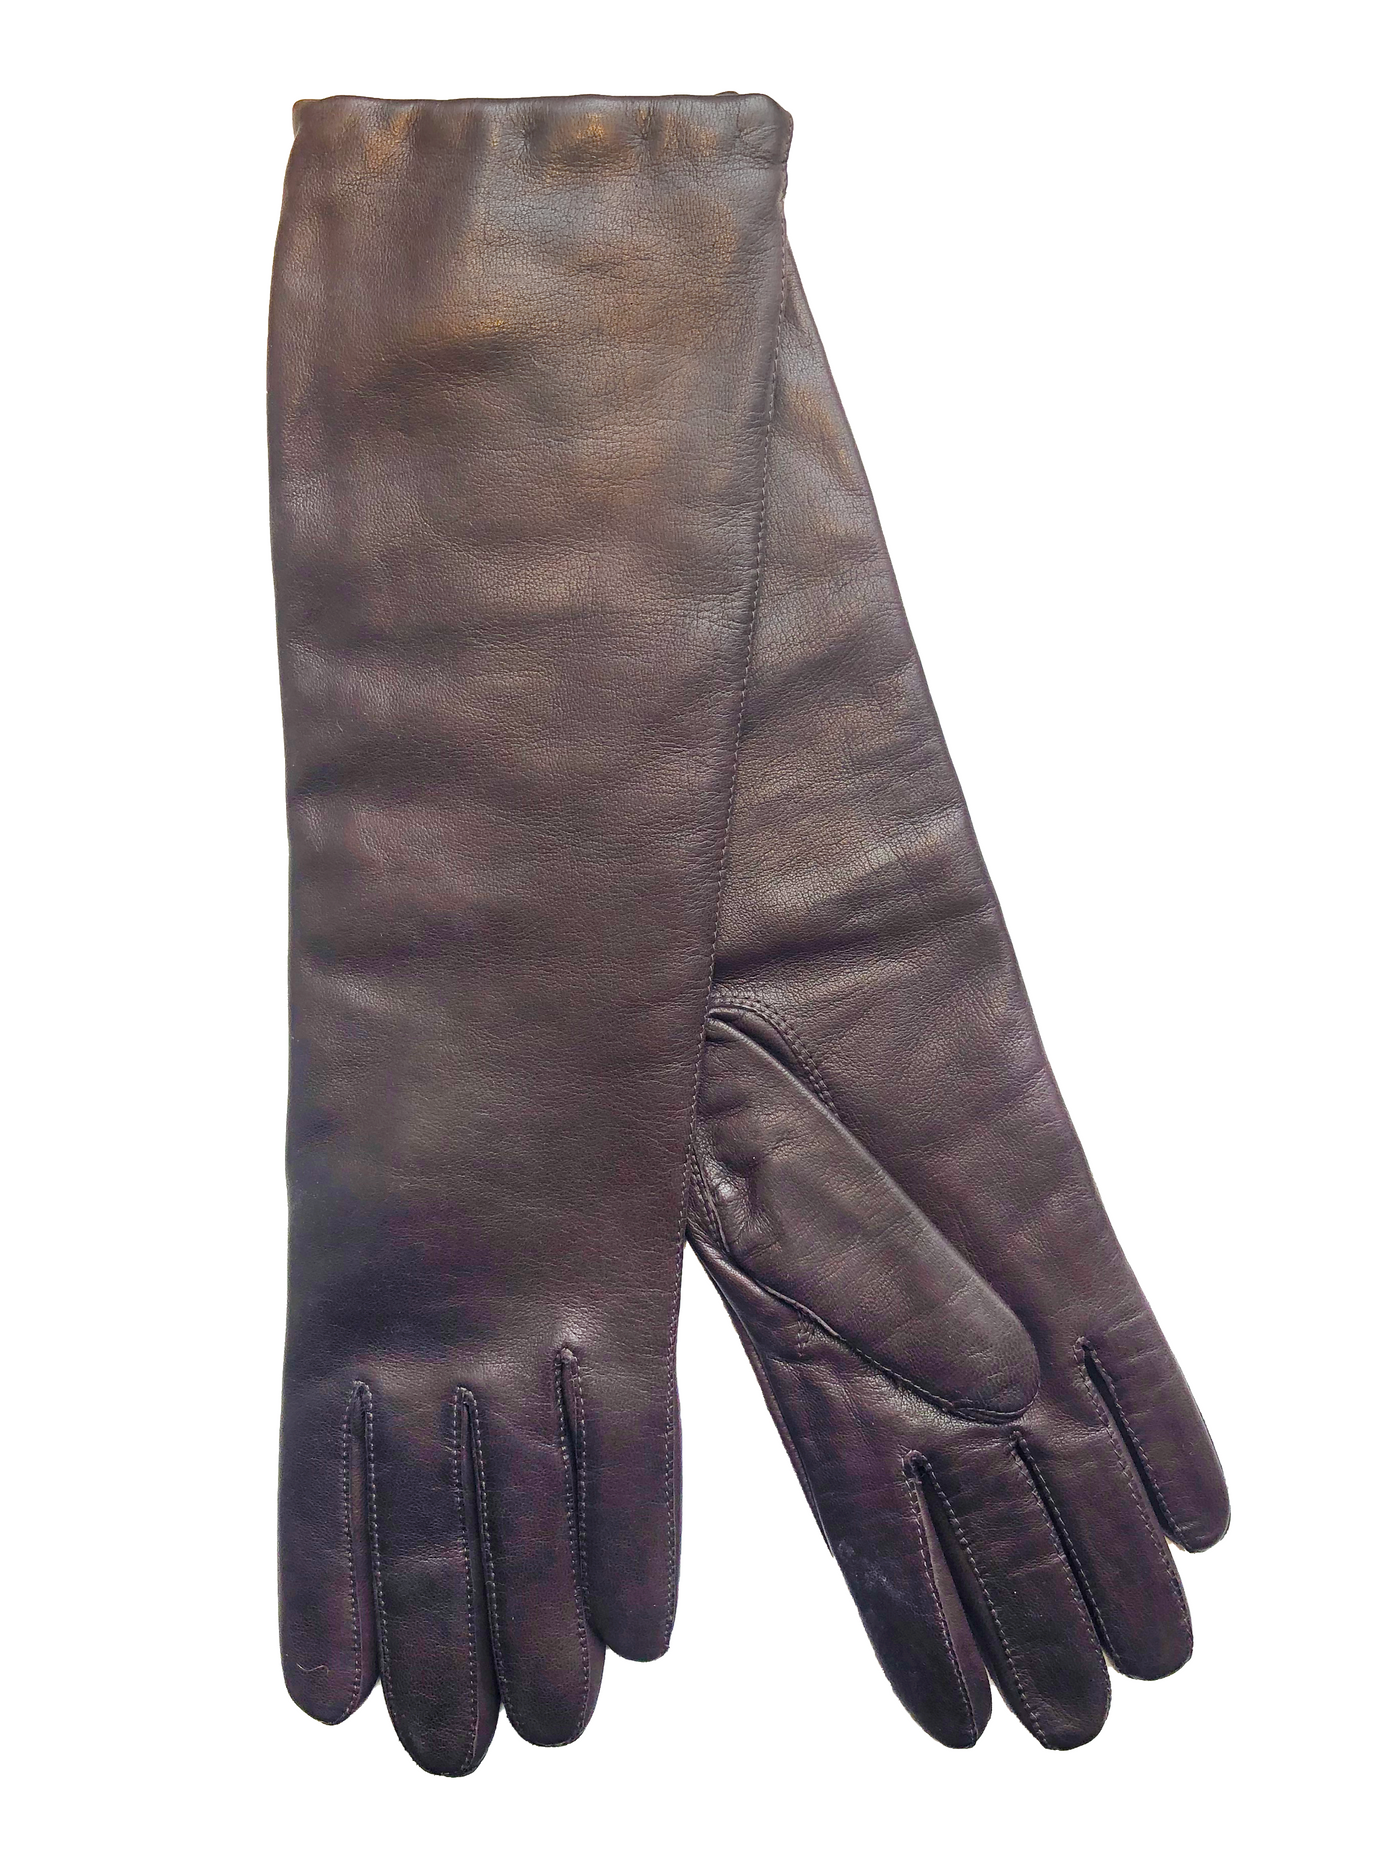 RH Handsker 201528 - Leather - Accesories - Brown